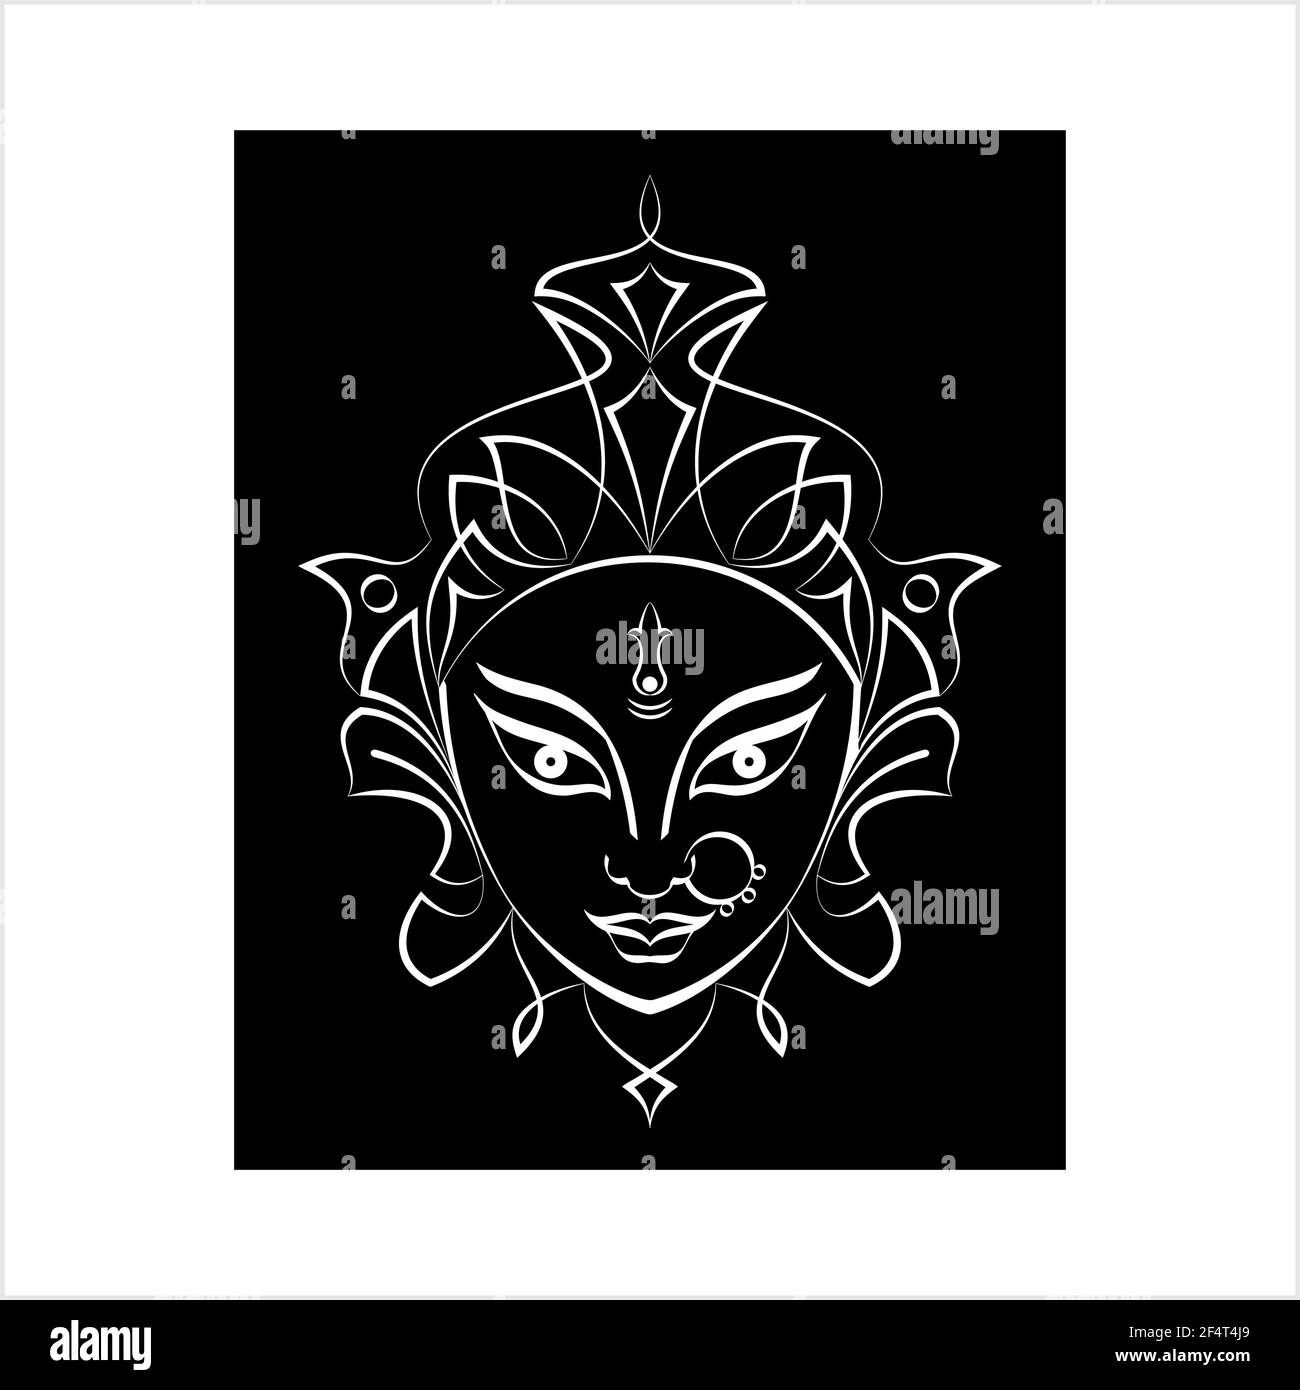 Durga Black and White Stock Photos & Images - Alamy